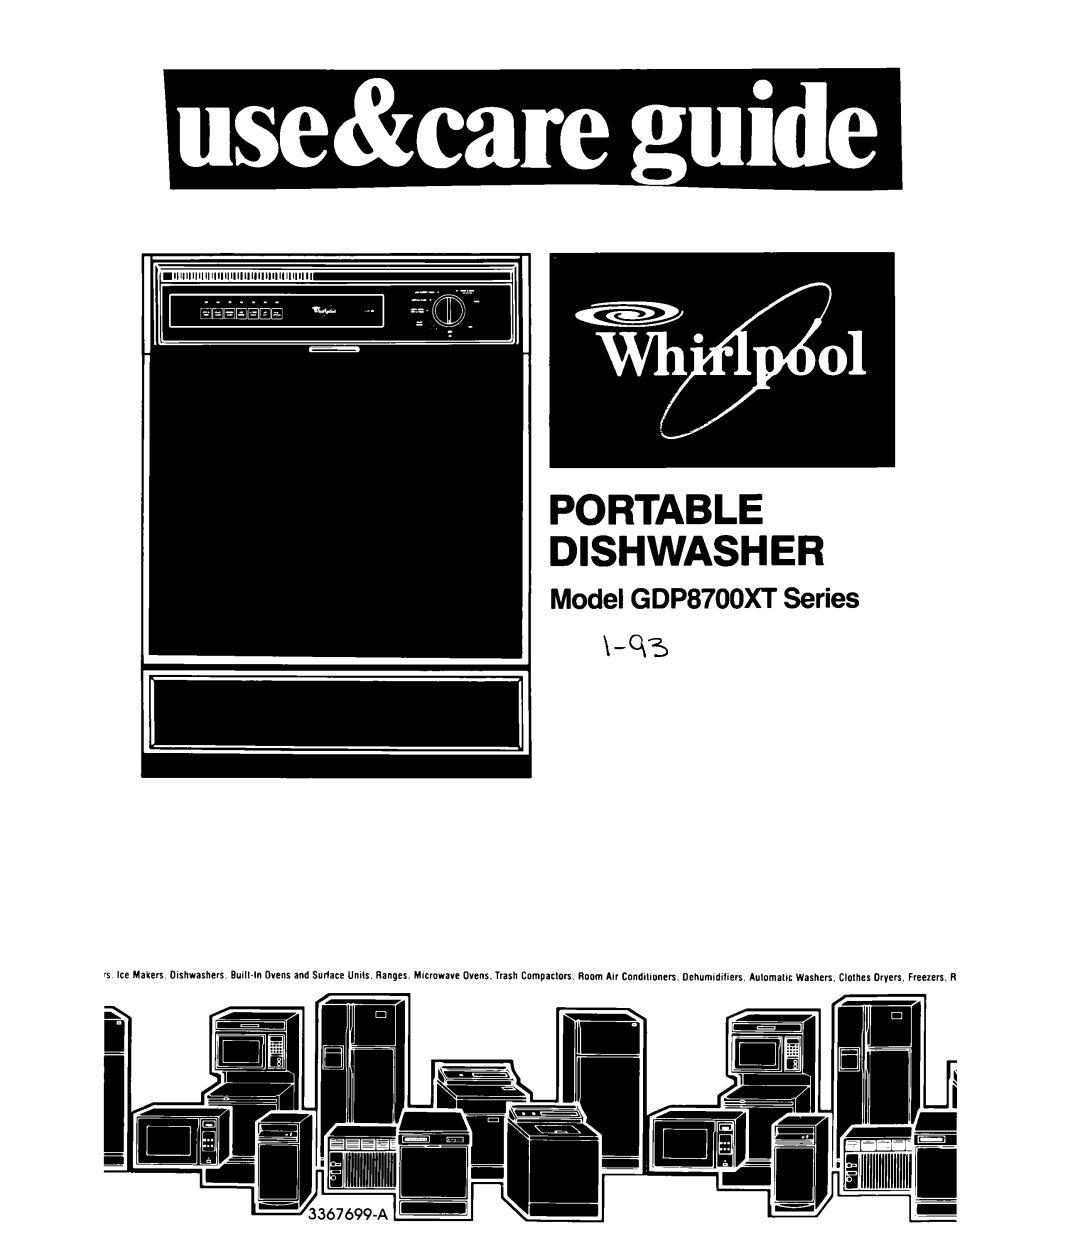 Whirlpool manual Model GDP8700XT Series \-q3, Portable Dishwasher 